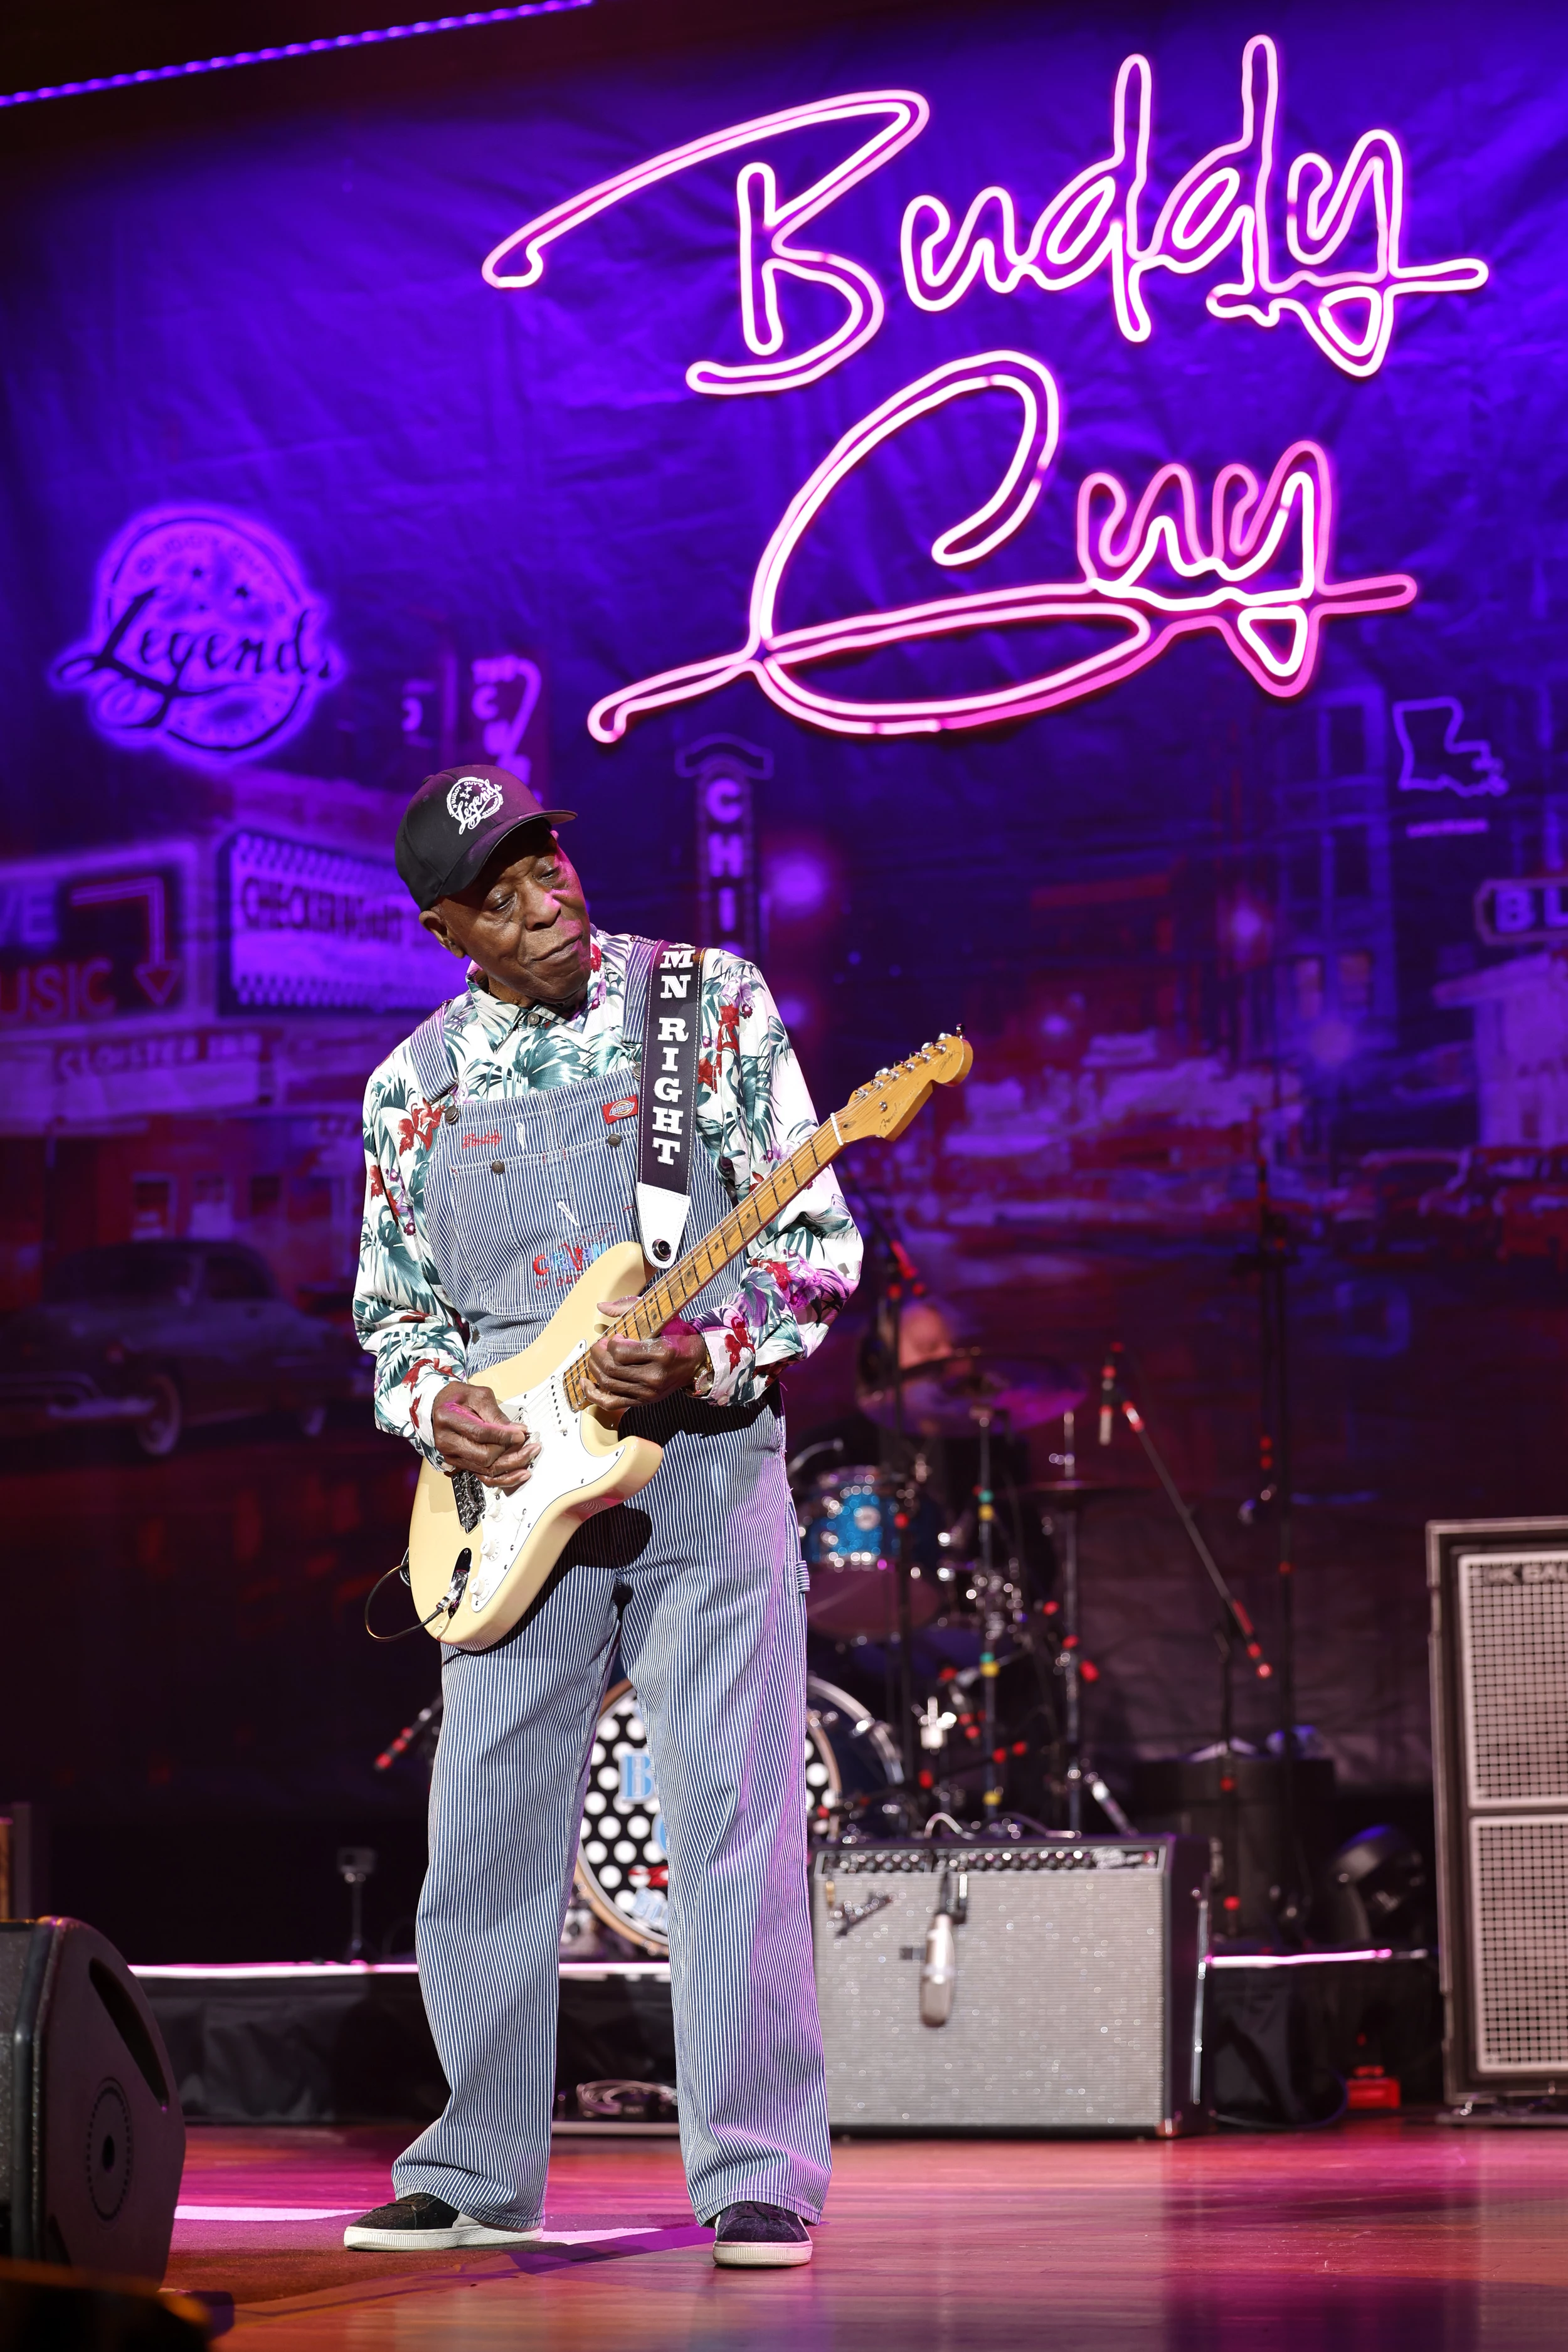 Buddy Guy With Christone "Kingfish" Ingram In Concert - Nashville, TN